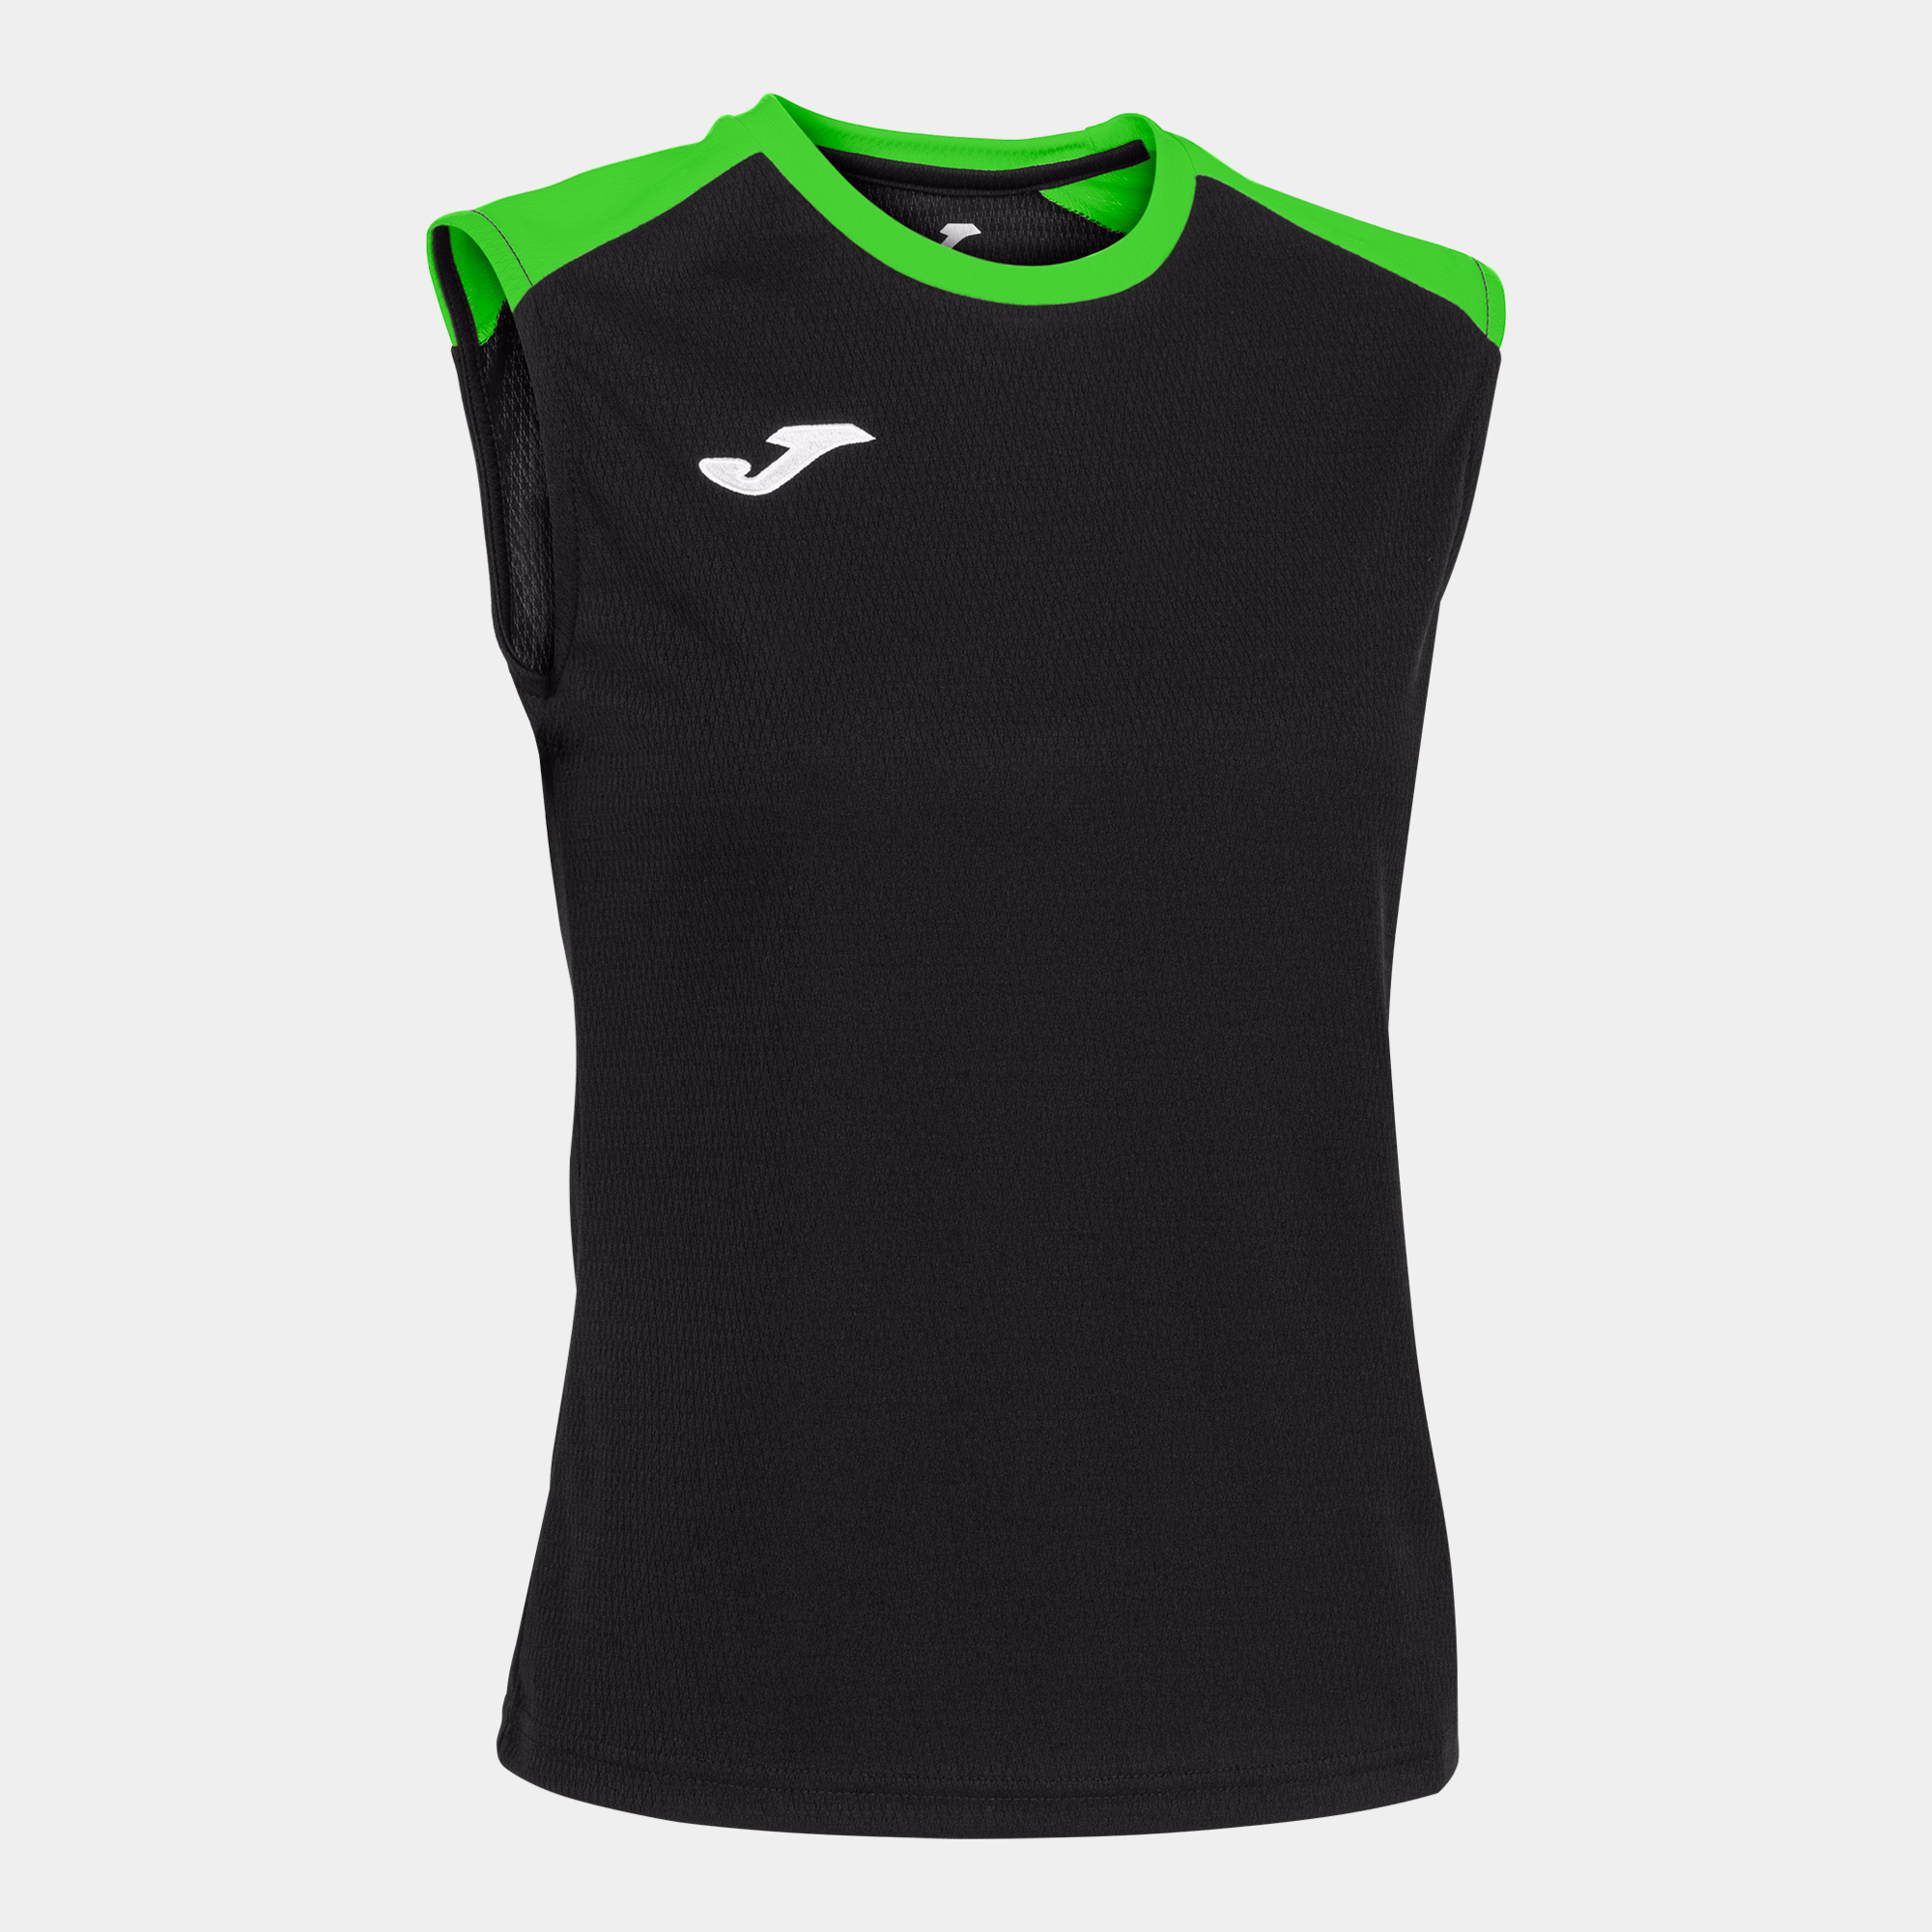 Camiseta Tirantes Joma Eco Championship Negro Verde Flúor